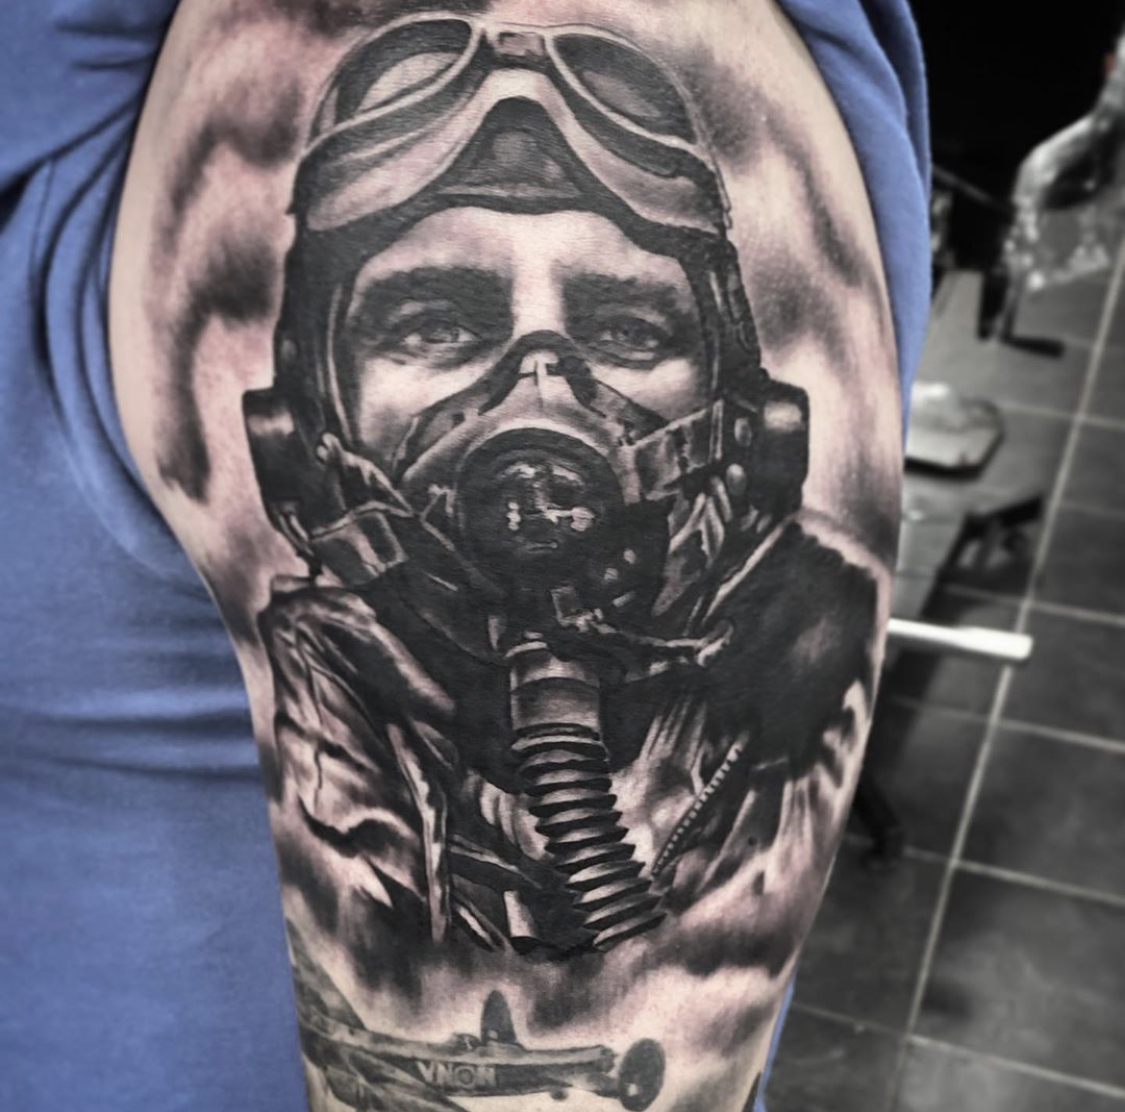 Emerald Tattoo Company (UK) on X: "Fighter pilot for Sean by @SamFishertattoo #emeraldtattoocompany #emeraldtattoo #talbotgreen #pontyclun #rct #cardiff #southwales #ww2 #ww2memorial #memorialtattoo # fighterpilot #blackandgreytattoo #blackandgrey ...